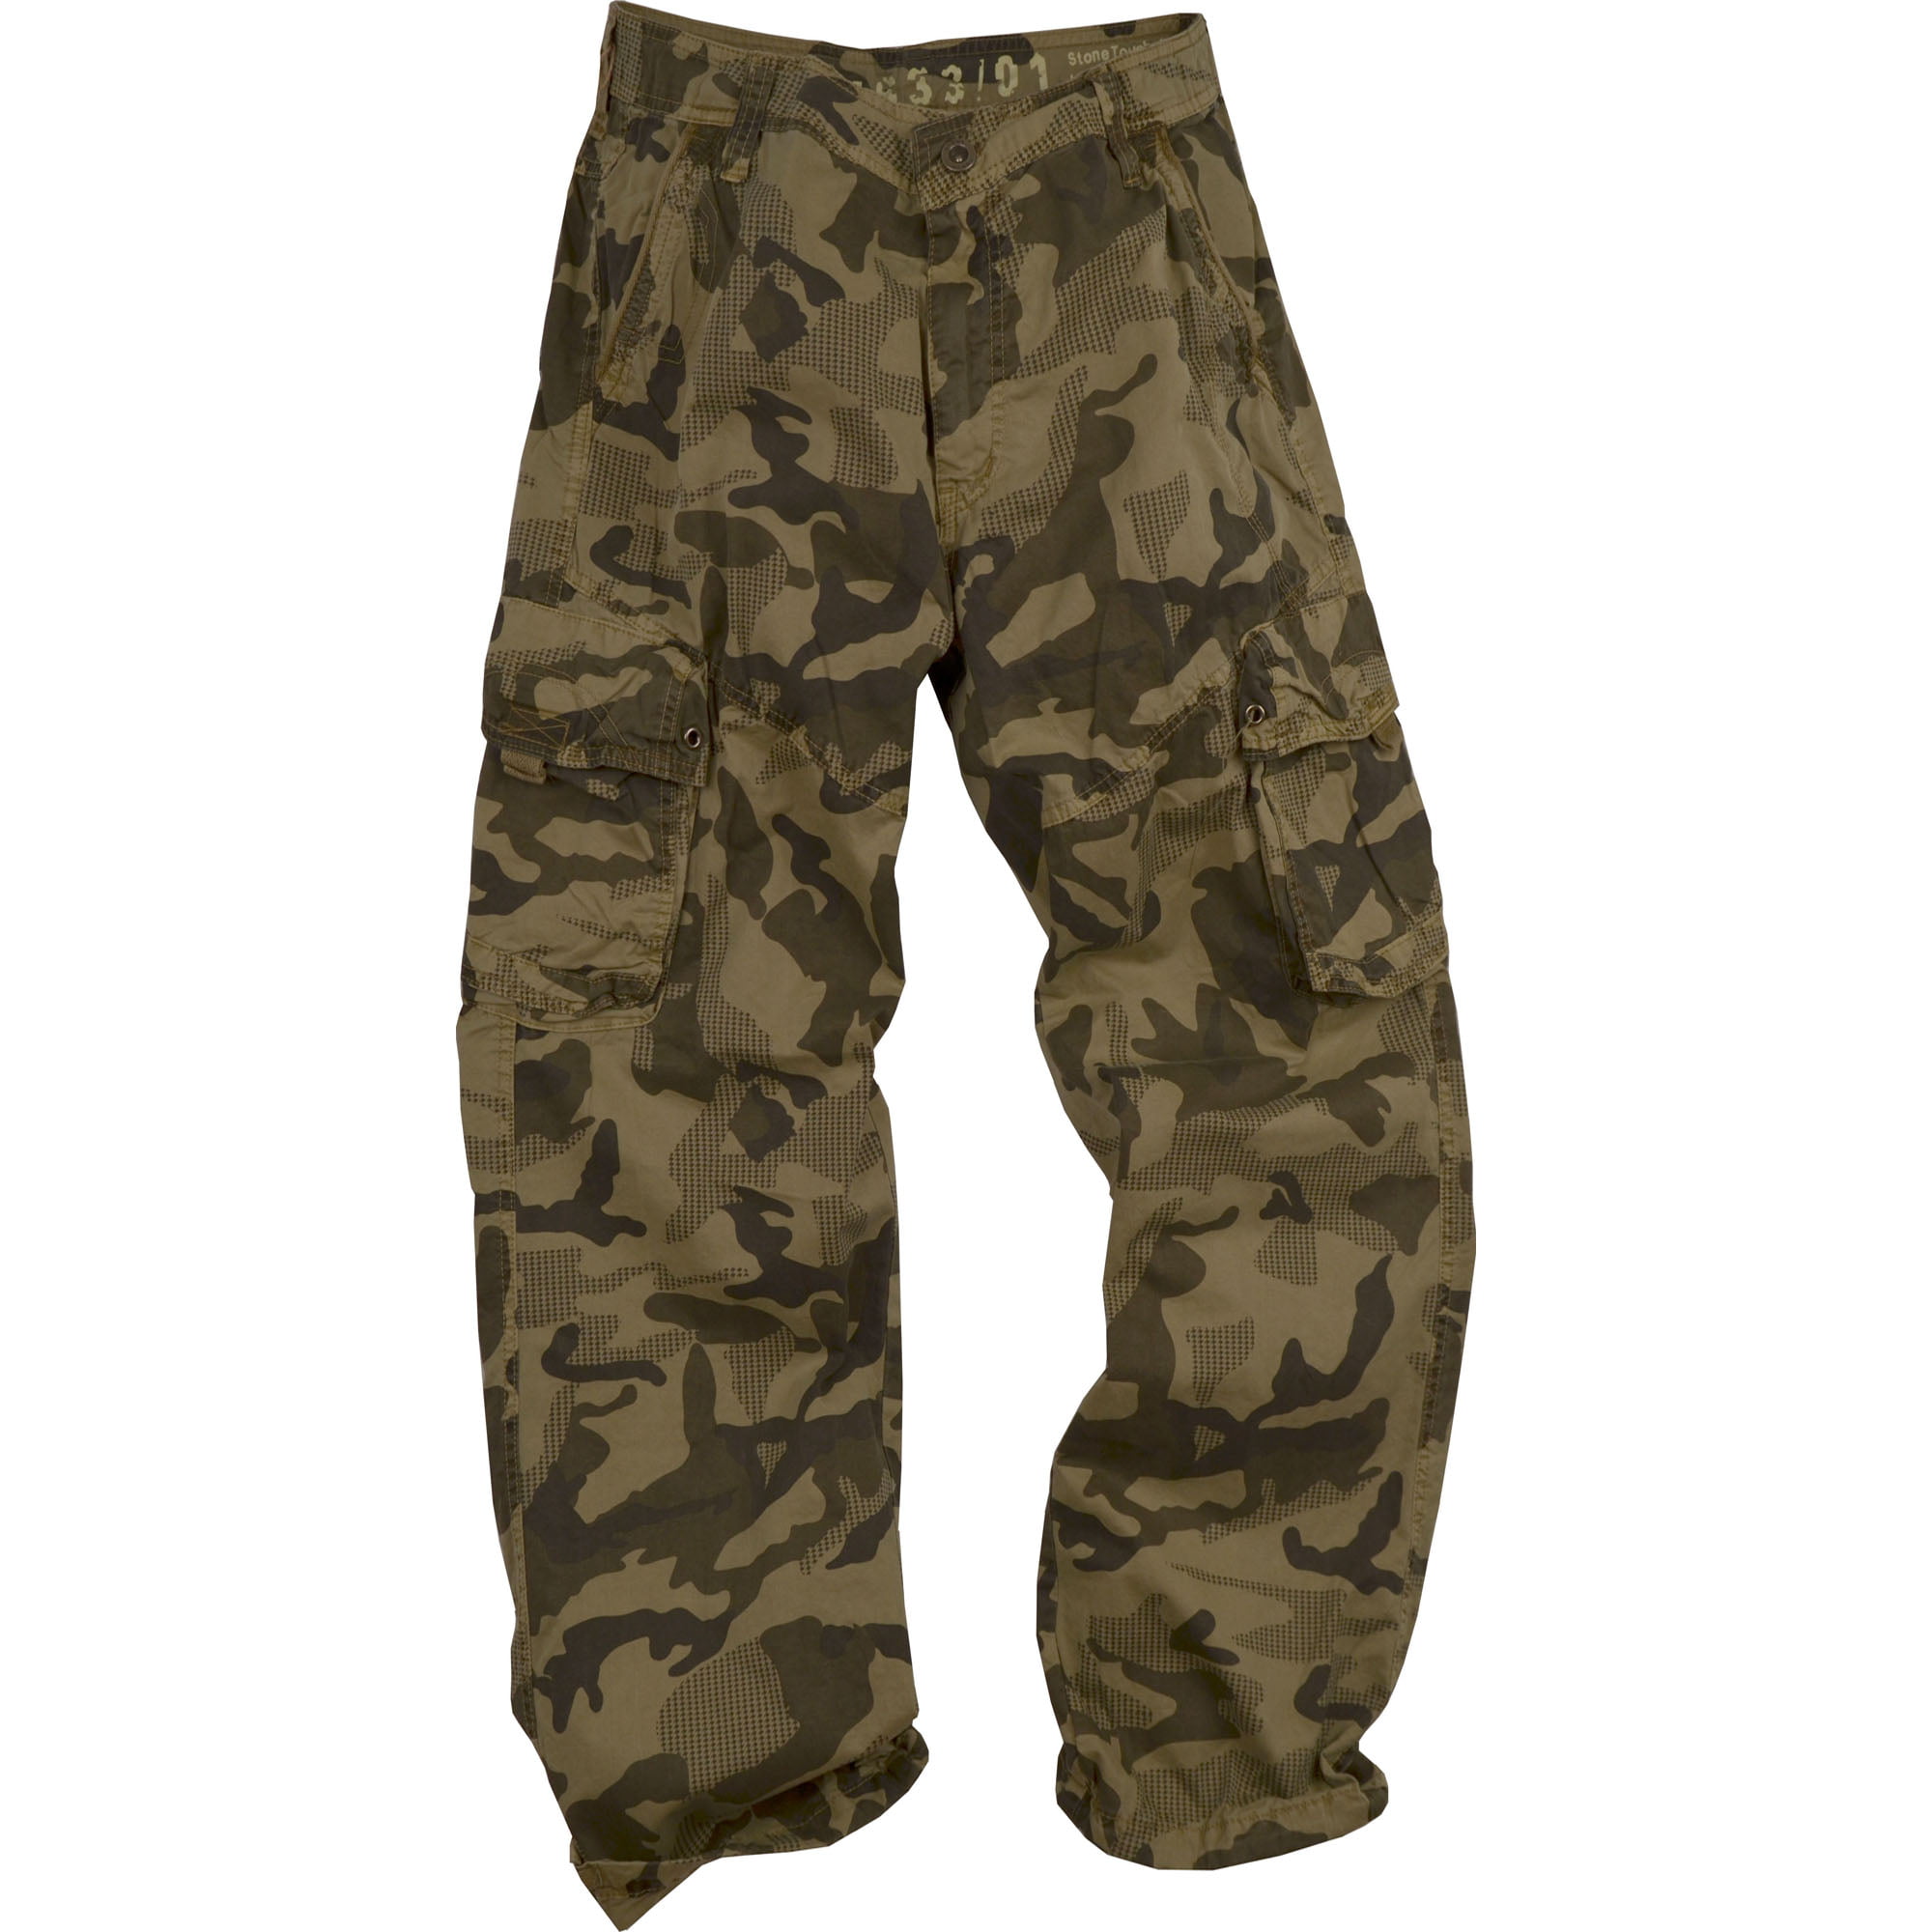 STONE TOUCH Men's Military-Style Cargo Dust-Khaki color Camo Pants